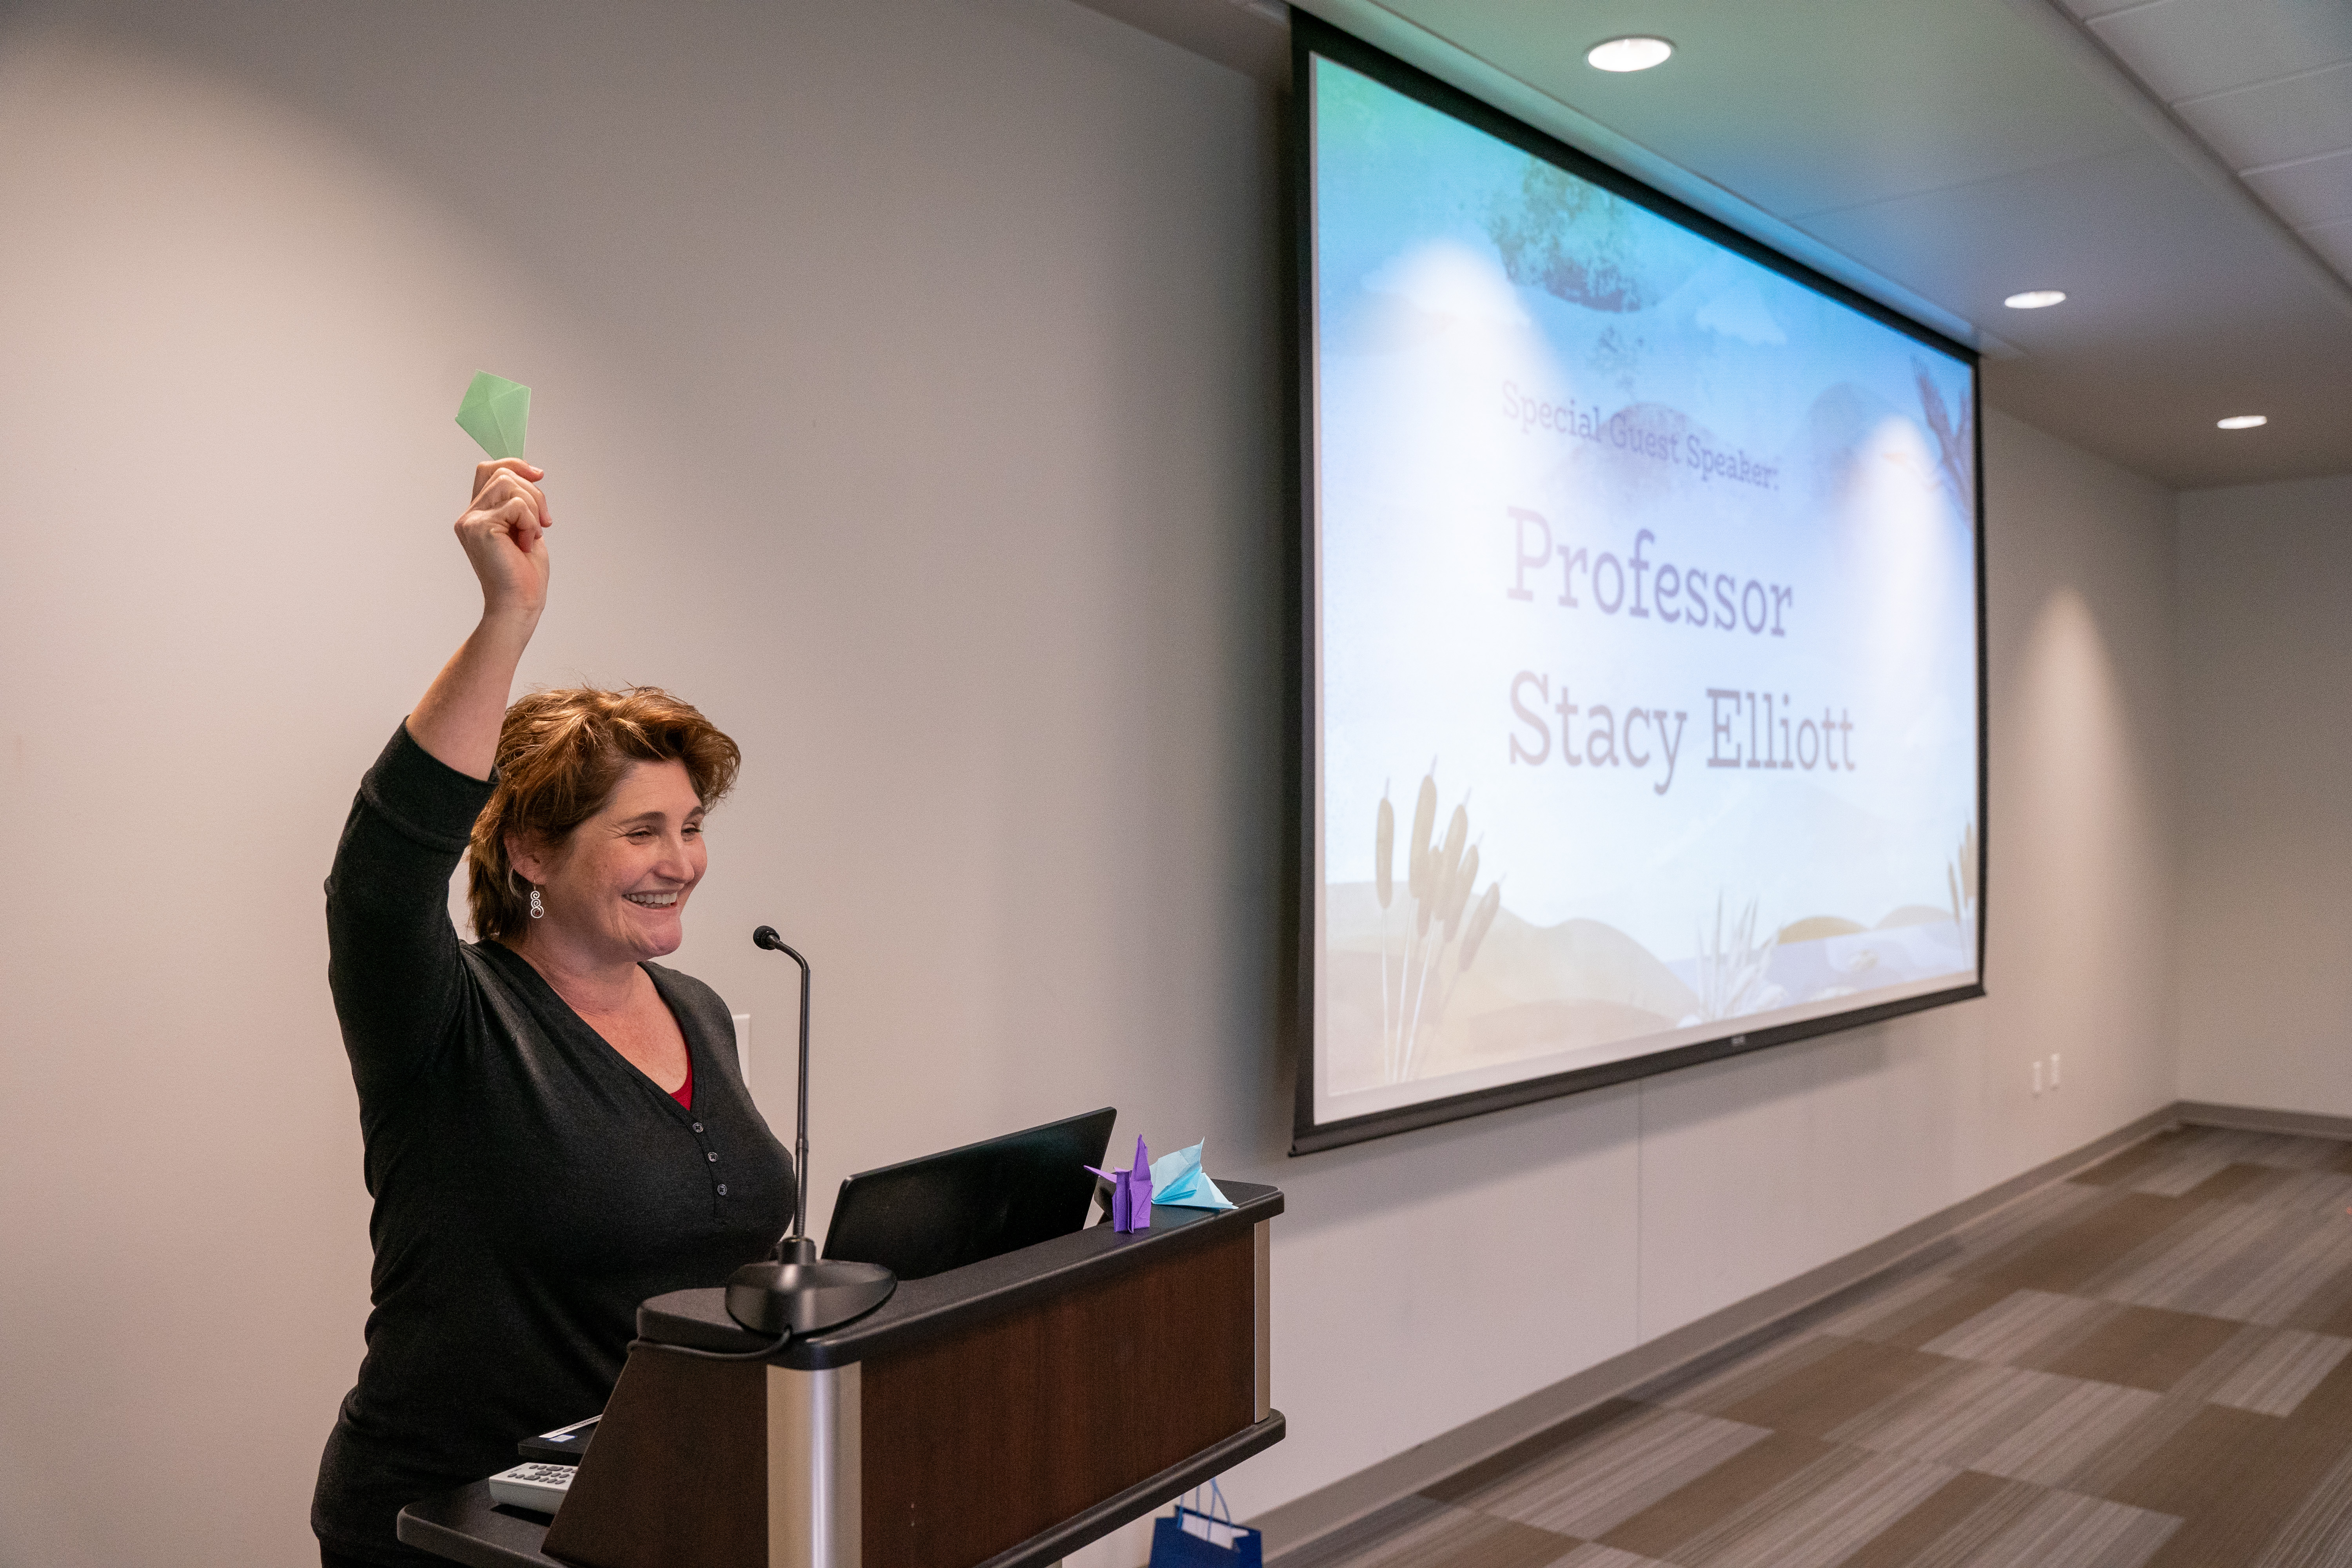 Professor Stacy Elliott presenting to students